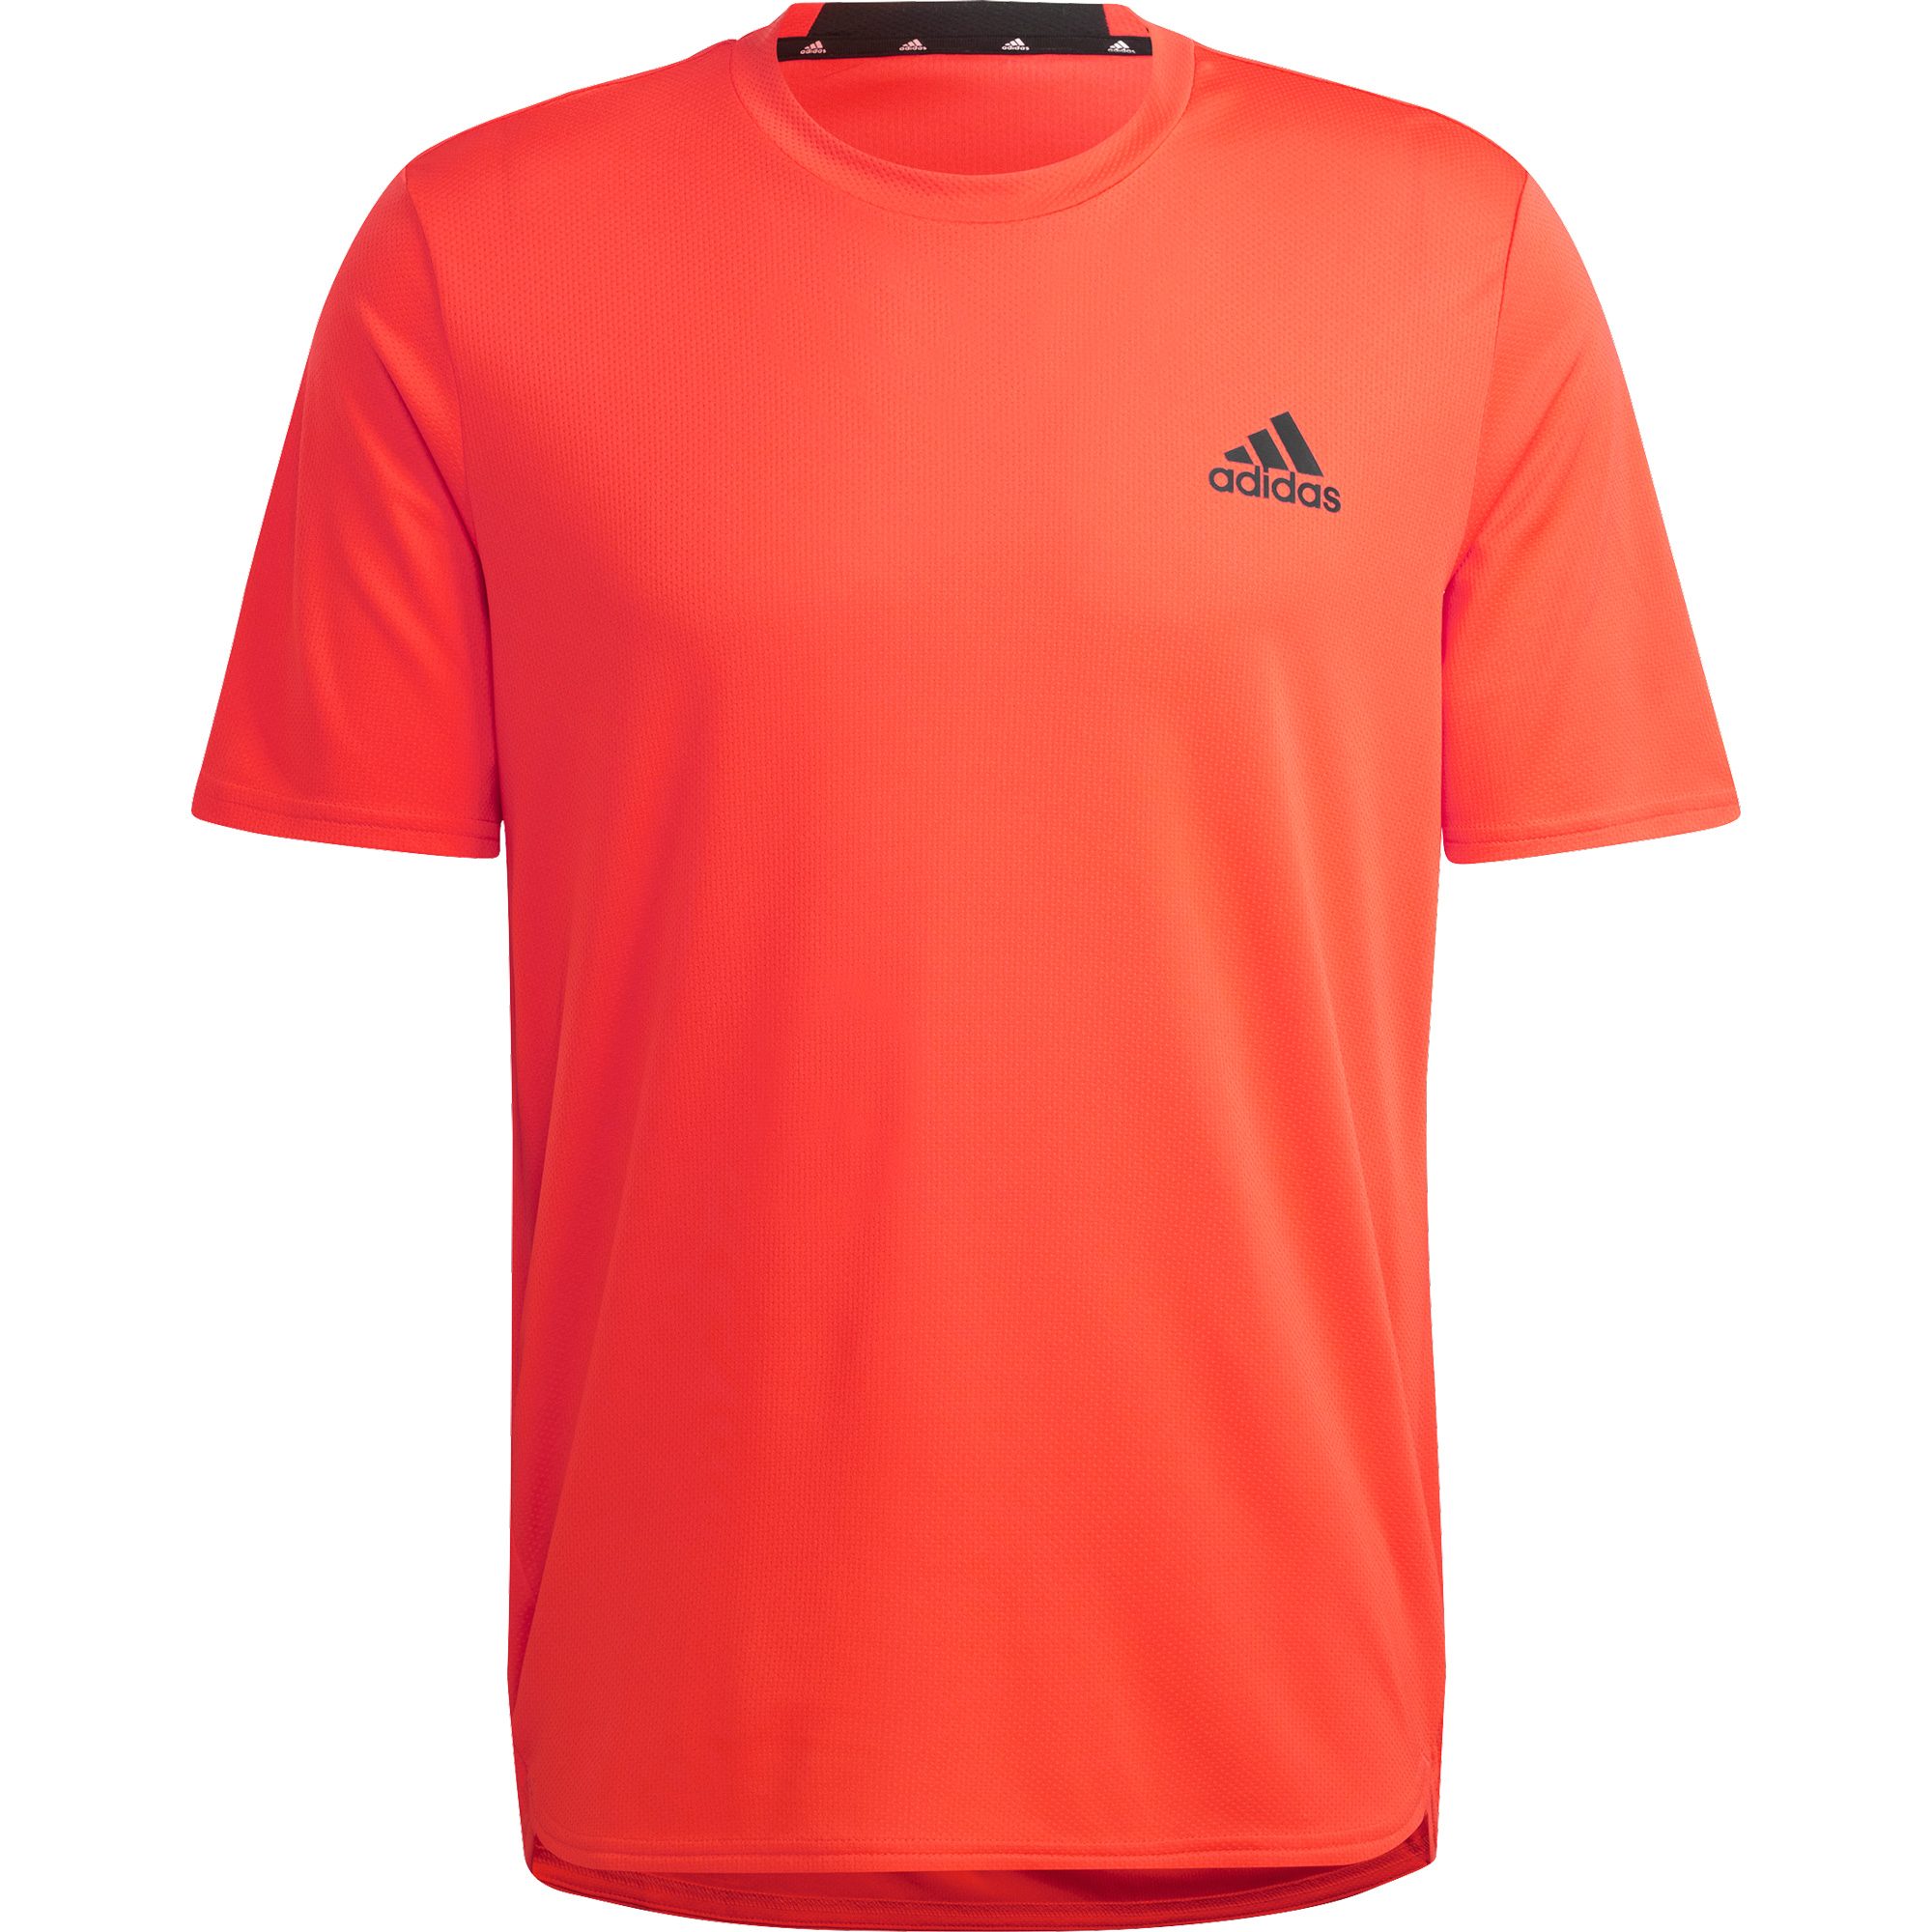 adidas - Aeroready Designed for Movement T-Shirt Herren hellrot kaufen im  Sport Bittl Shop | V-Shirts